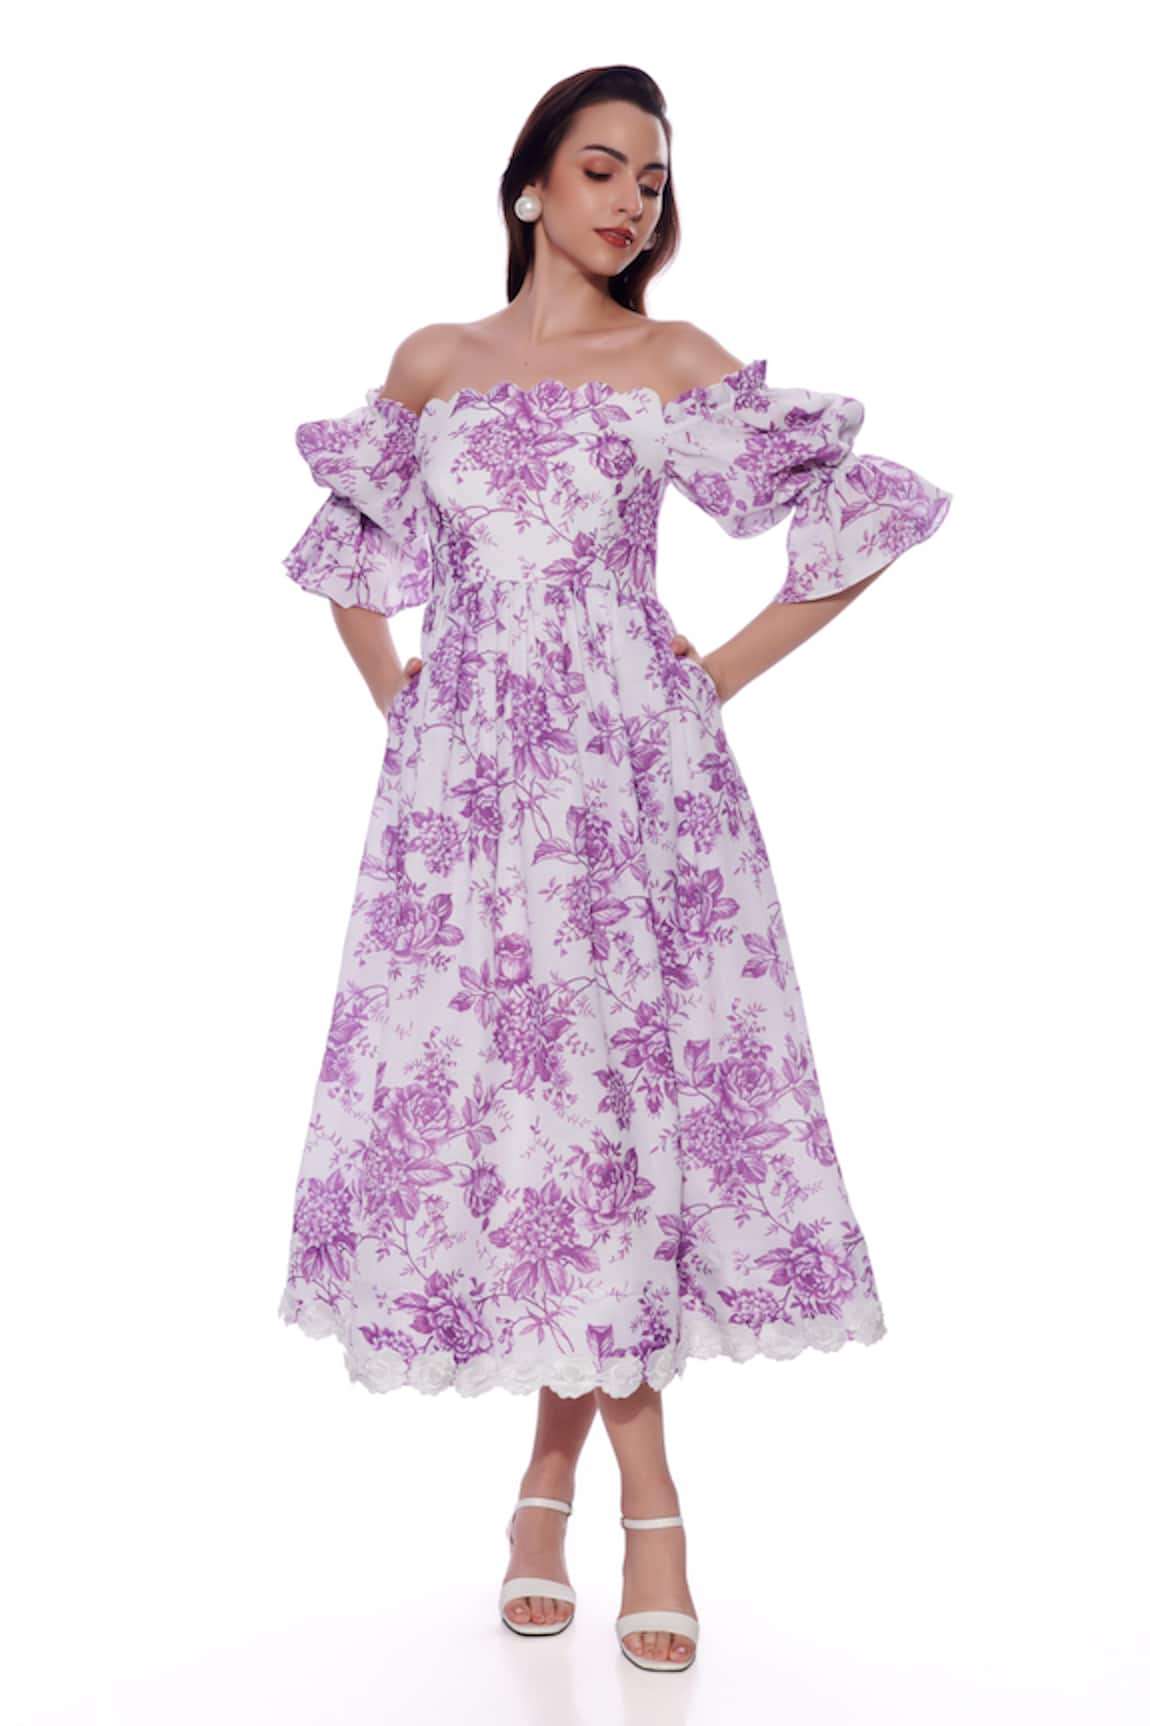 Verano by Tanya Rosa Floral Print Off Shoulder Dress